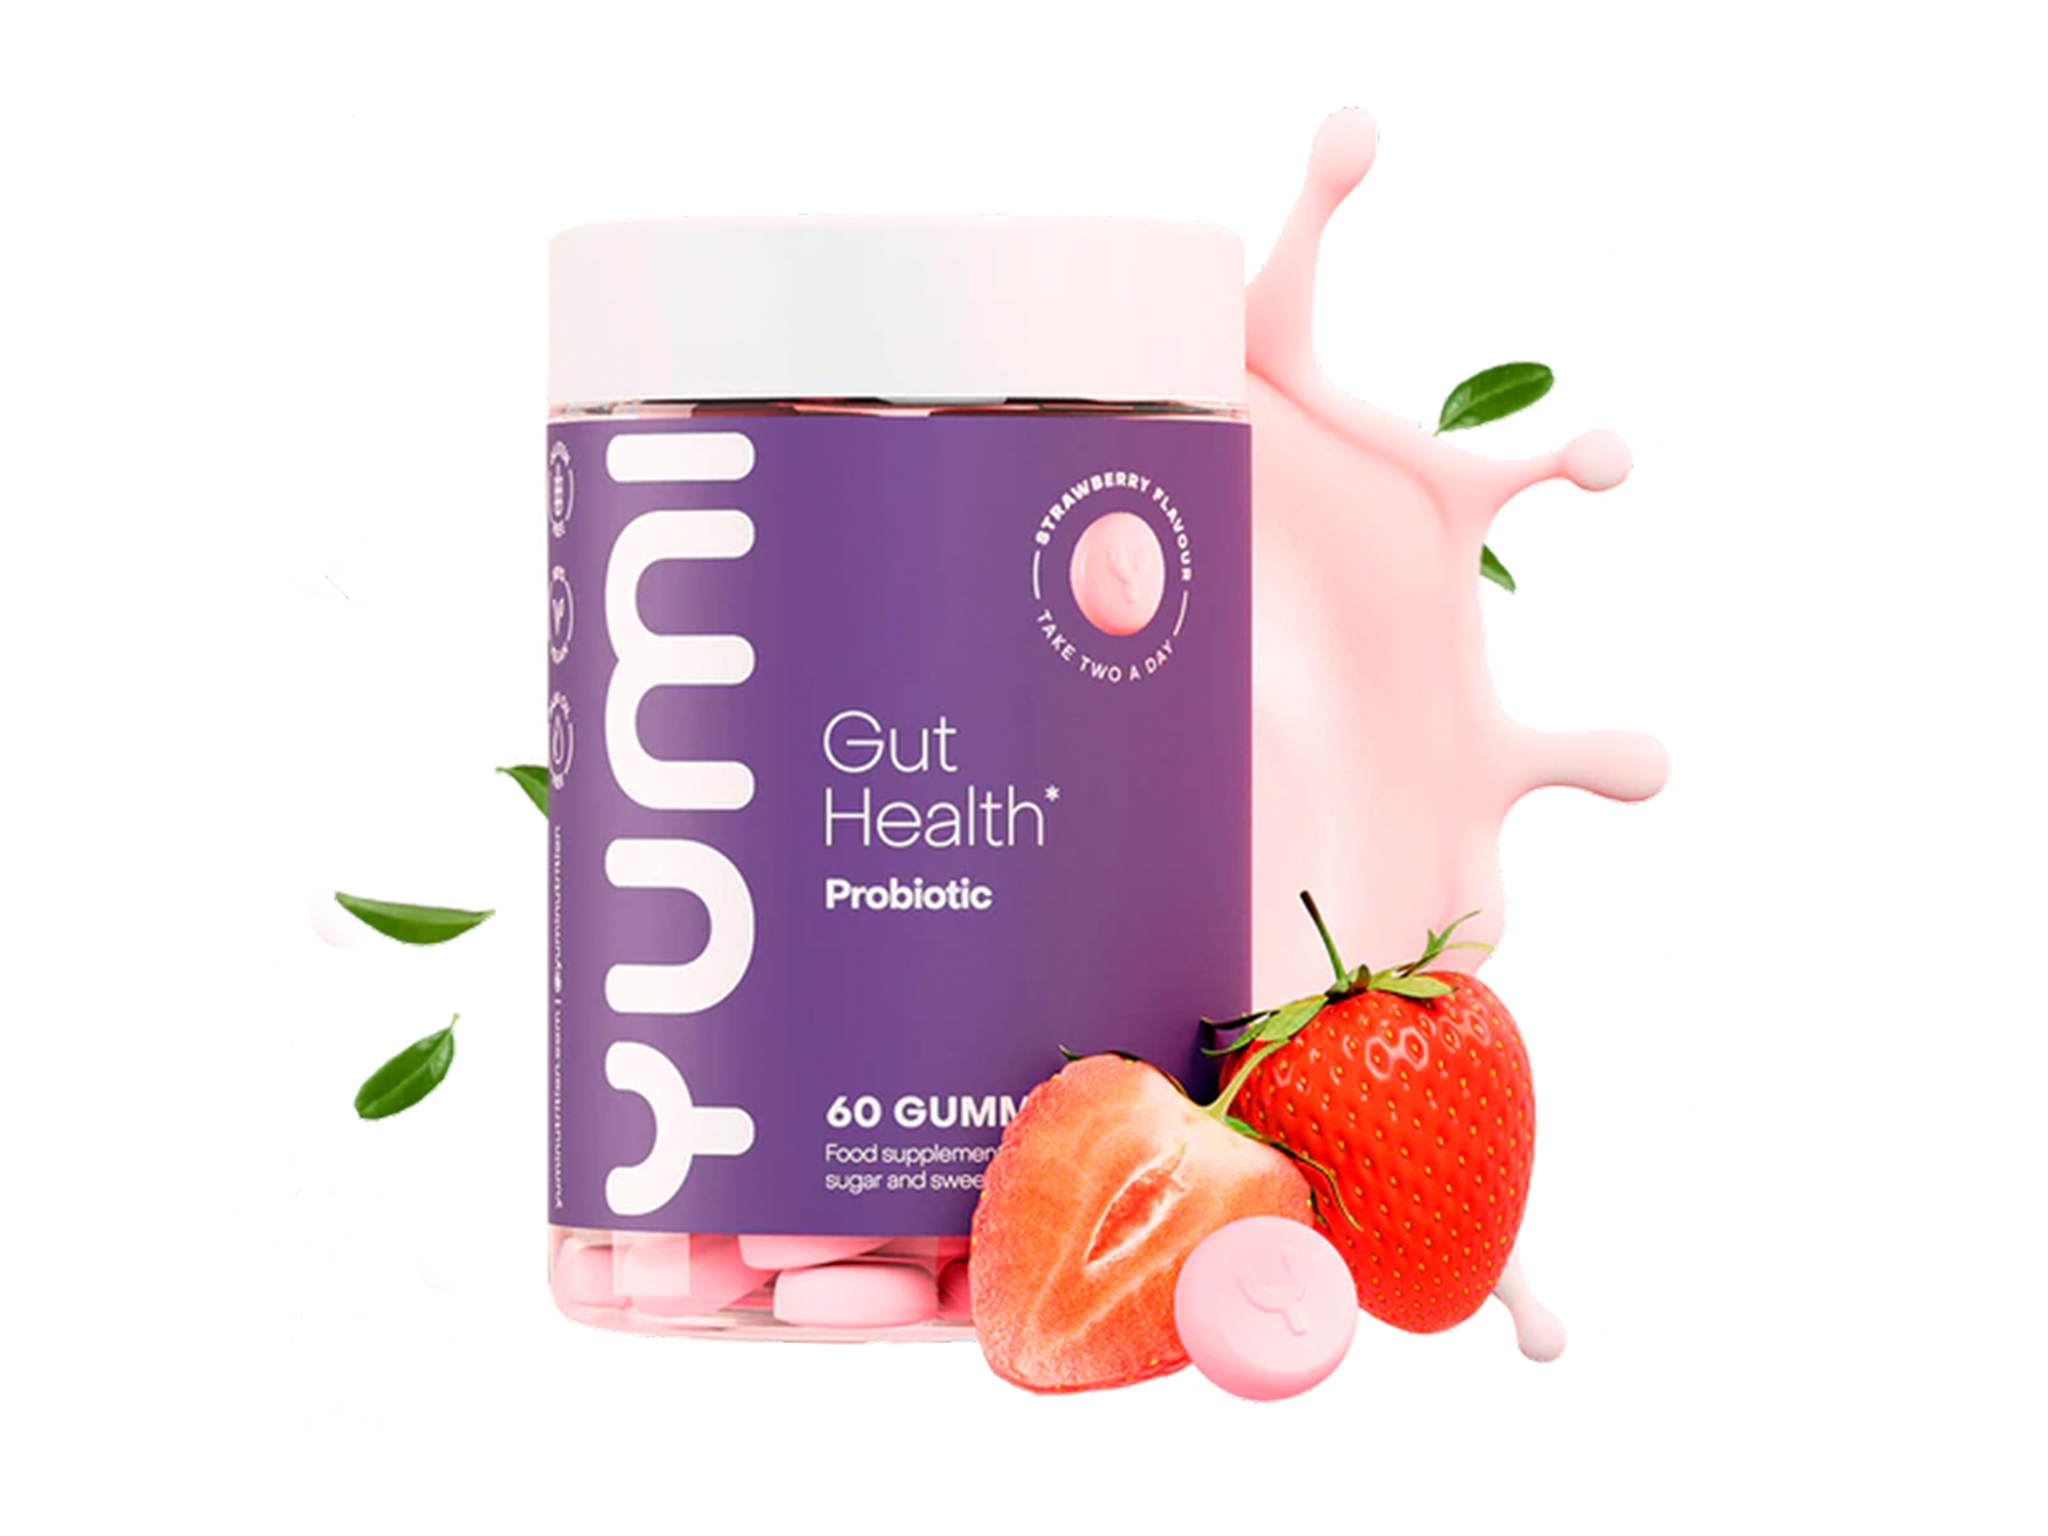 Yumi gut health probiotic, 60 gummies